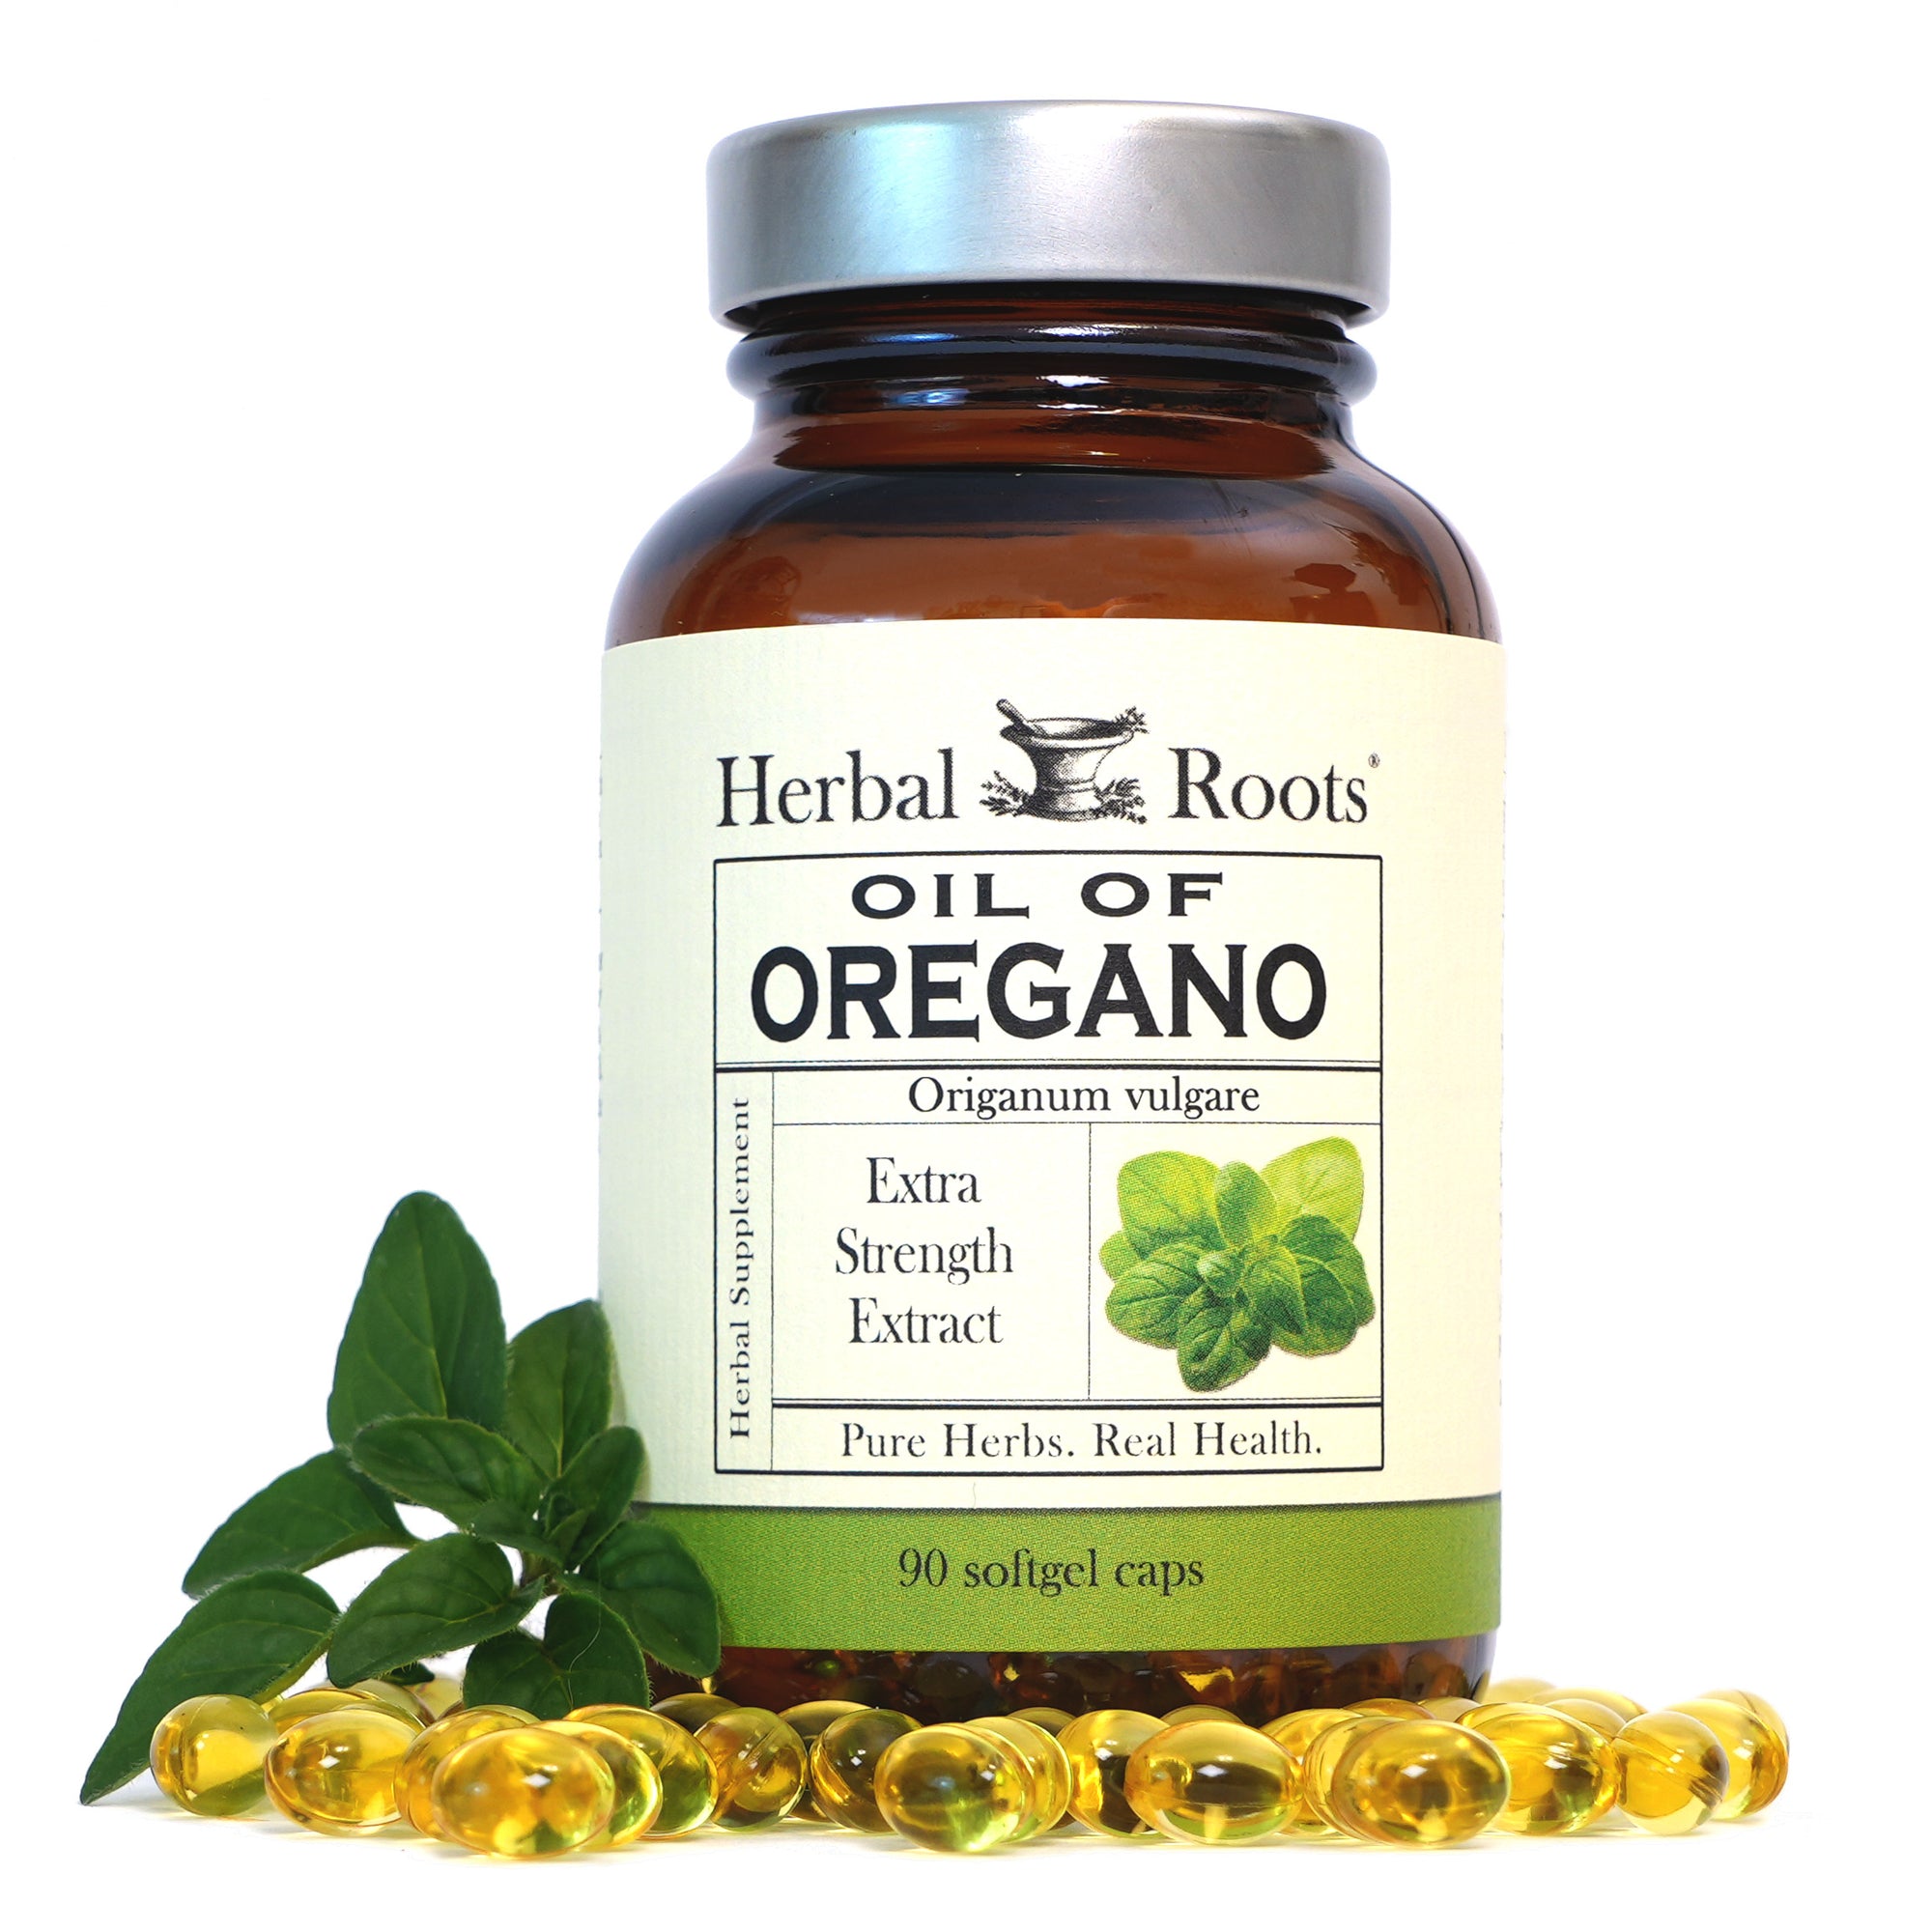 Bottle of Herbal Roots Oil of Oregano supplement